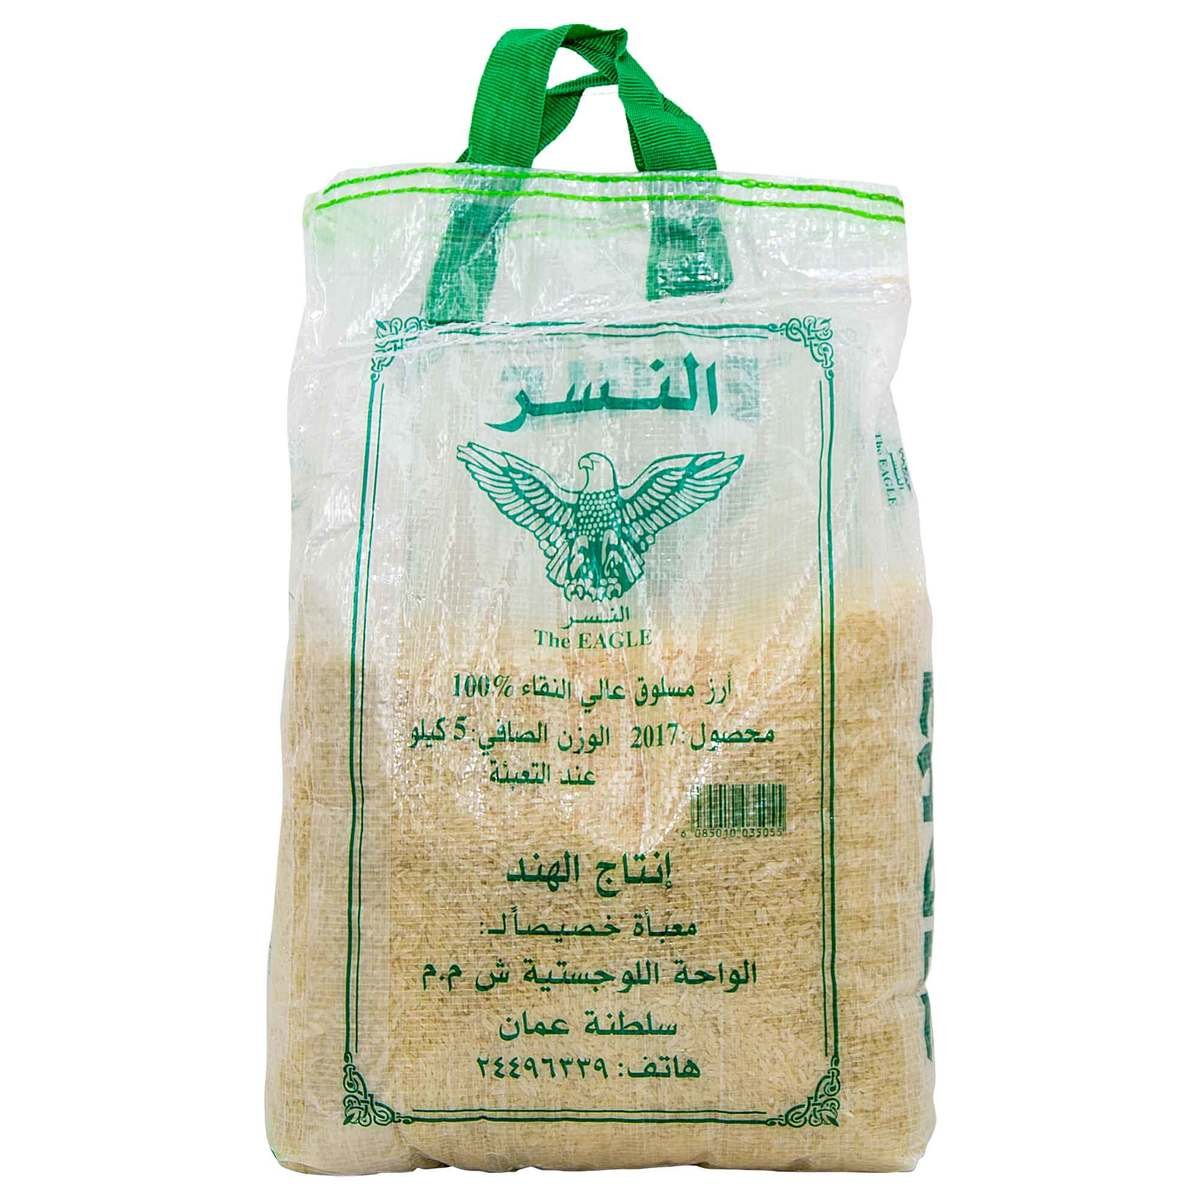 Eagle Indian 100% Sortexed Parboiled Long Grain  Rice 5kg